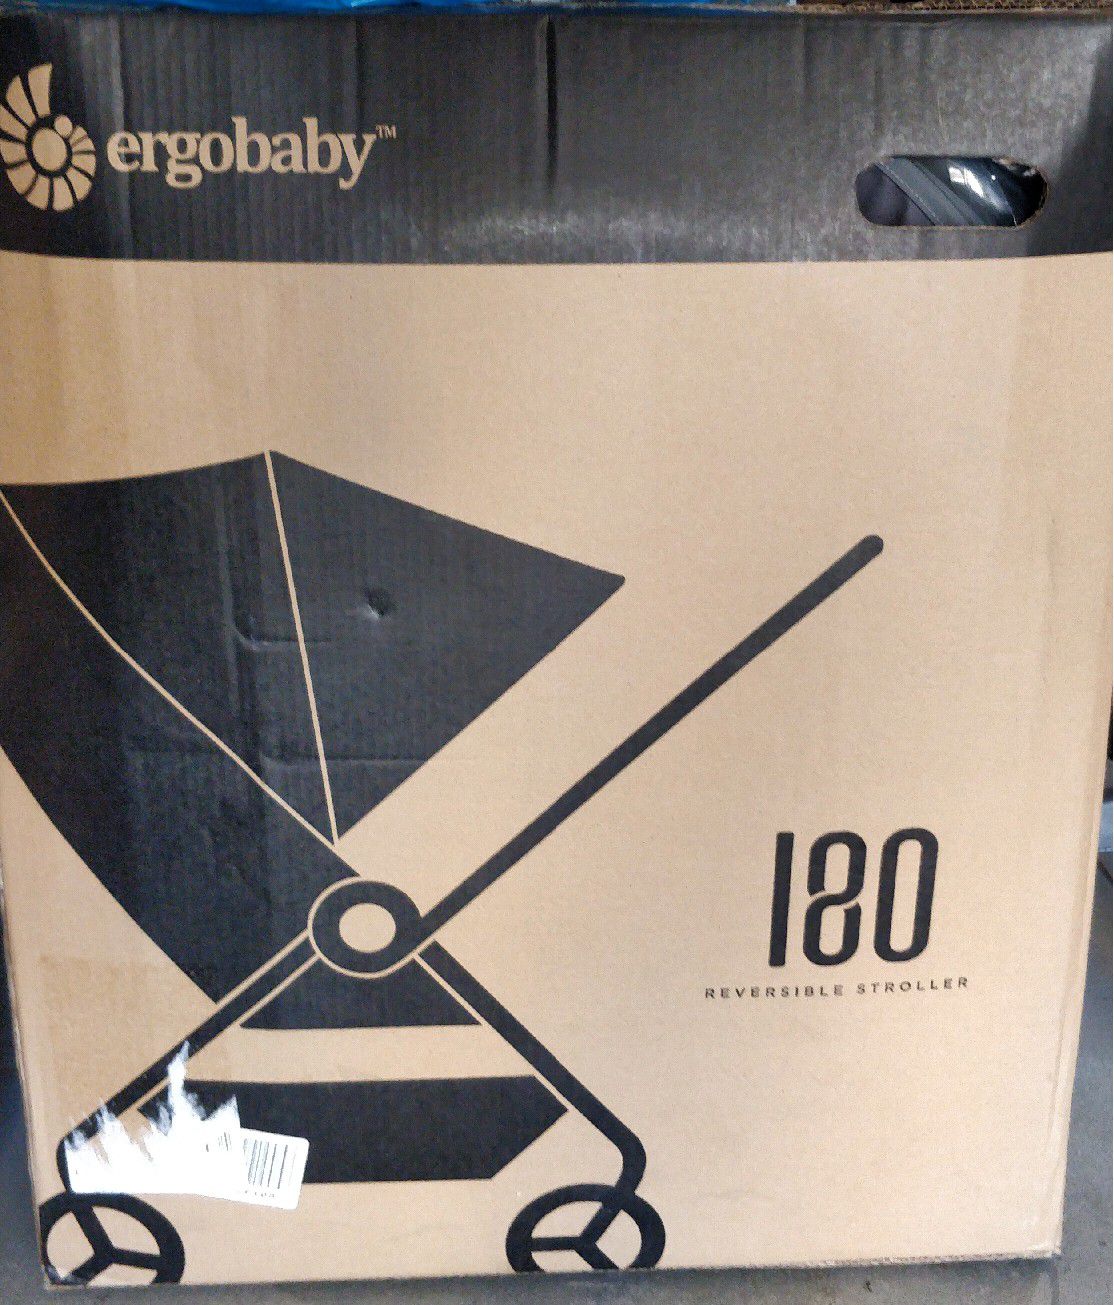 New! Ergobaby Stroller 180